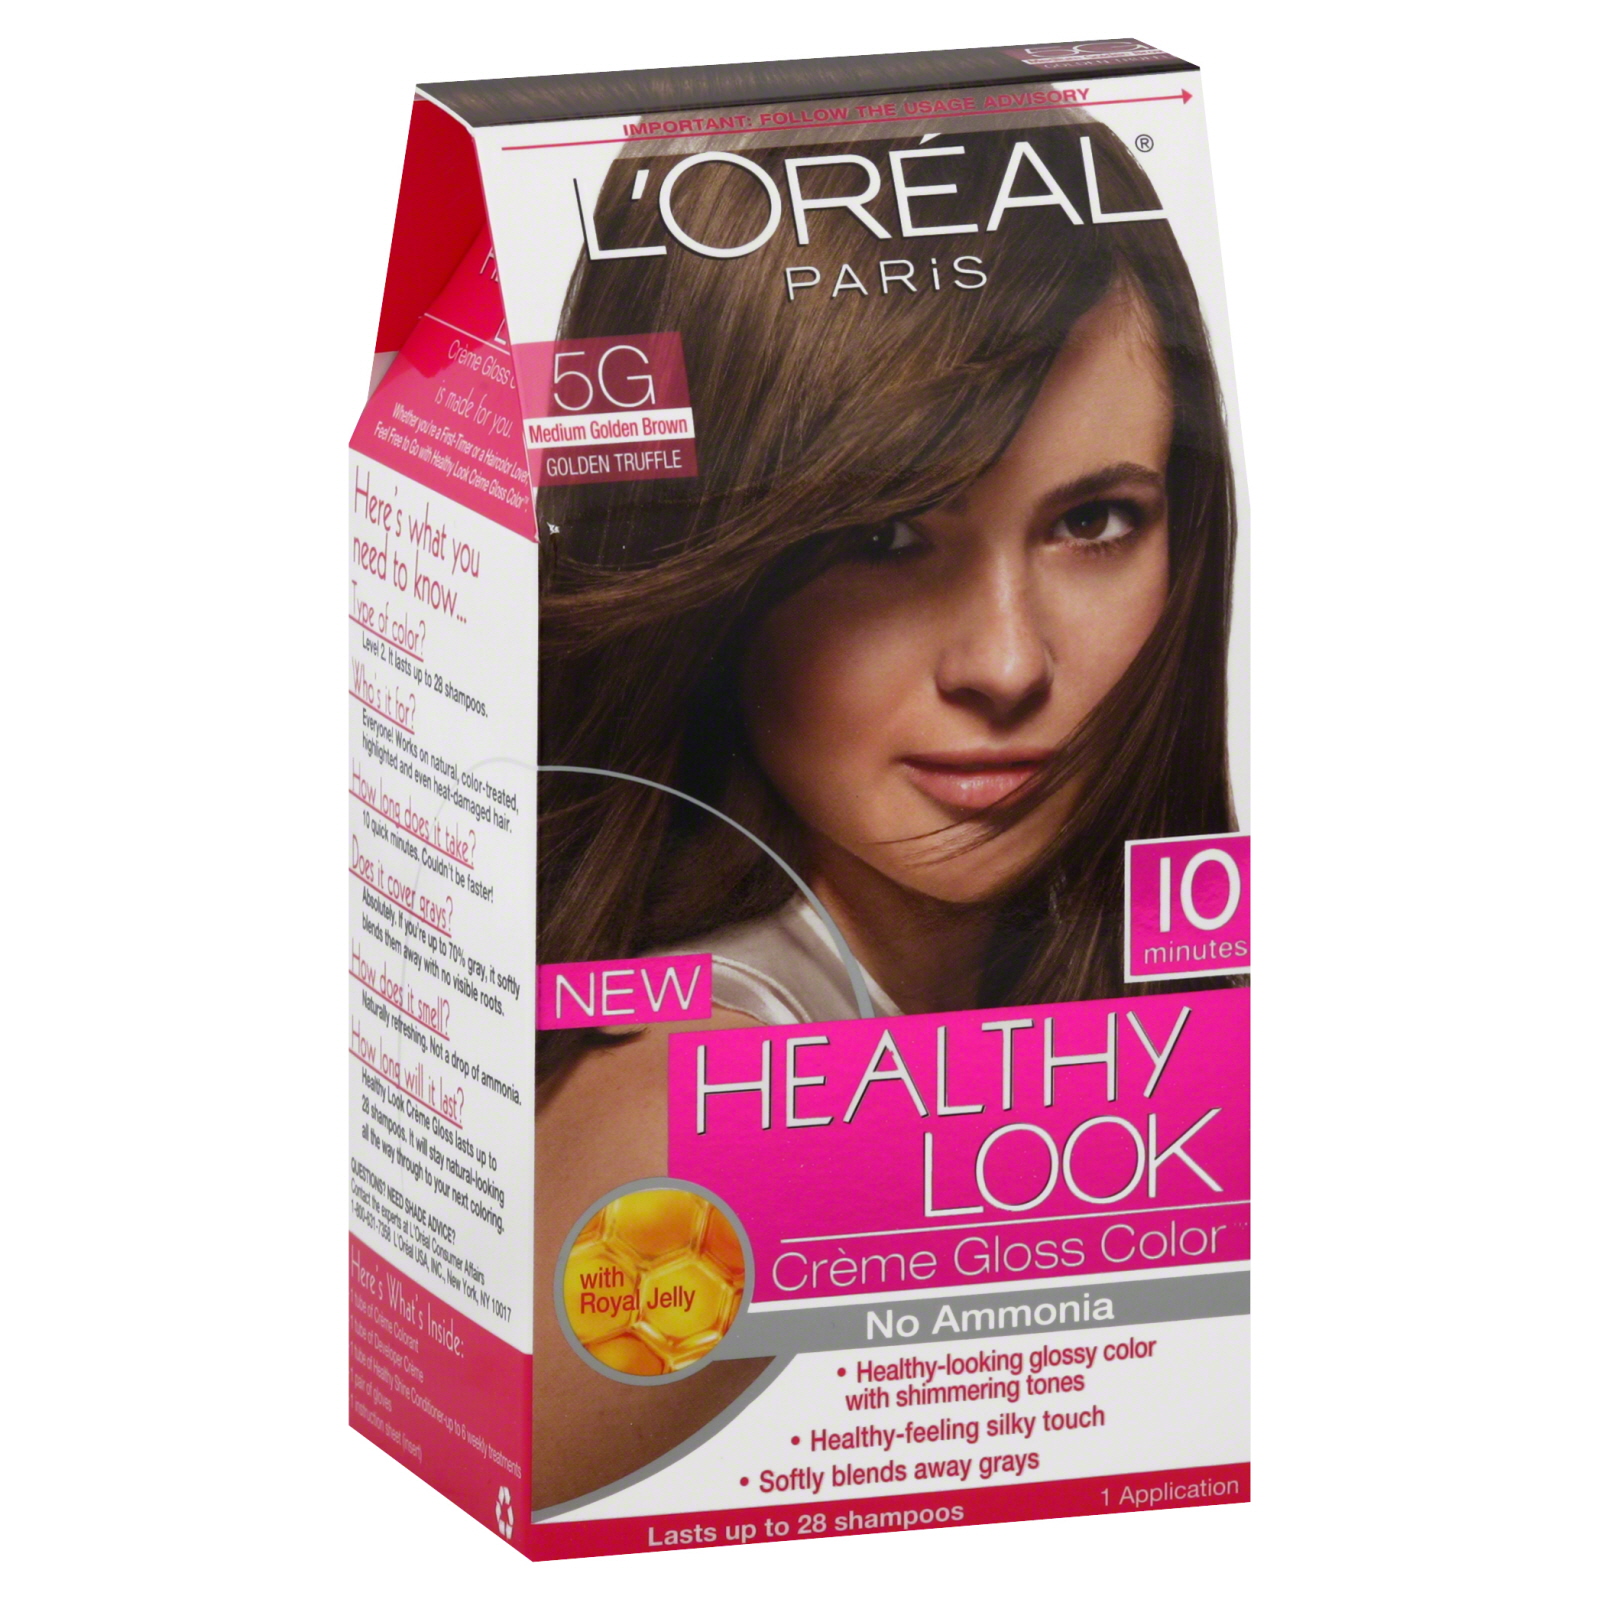 L'Oreal Healthy Look Hair Dye, Creme Gloss Color, Medium Golden Brown 5G, 1 application